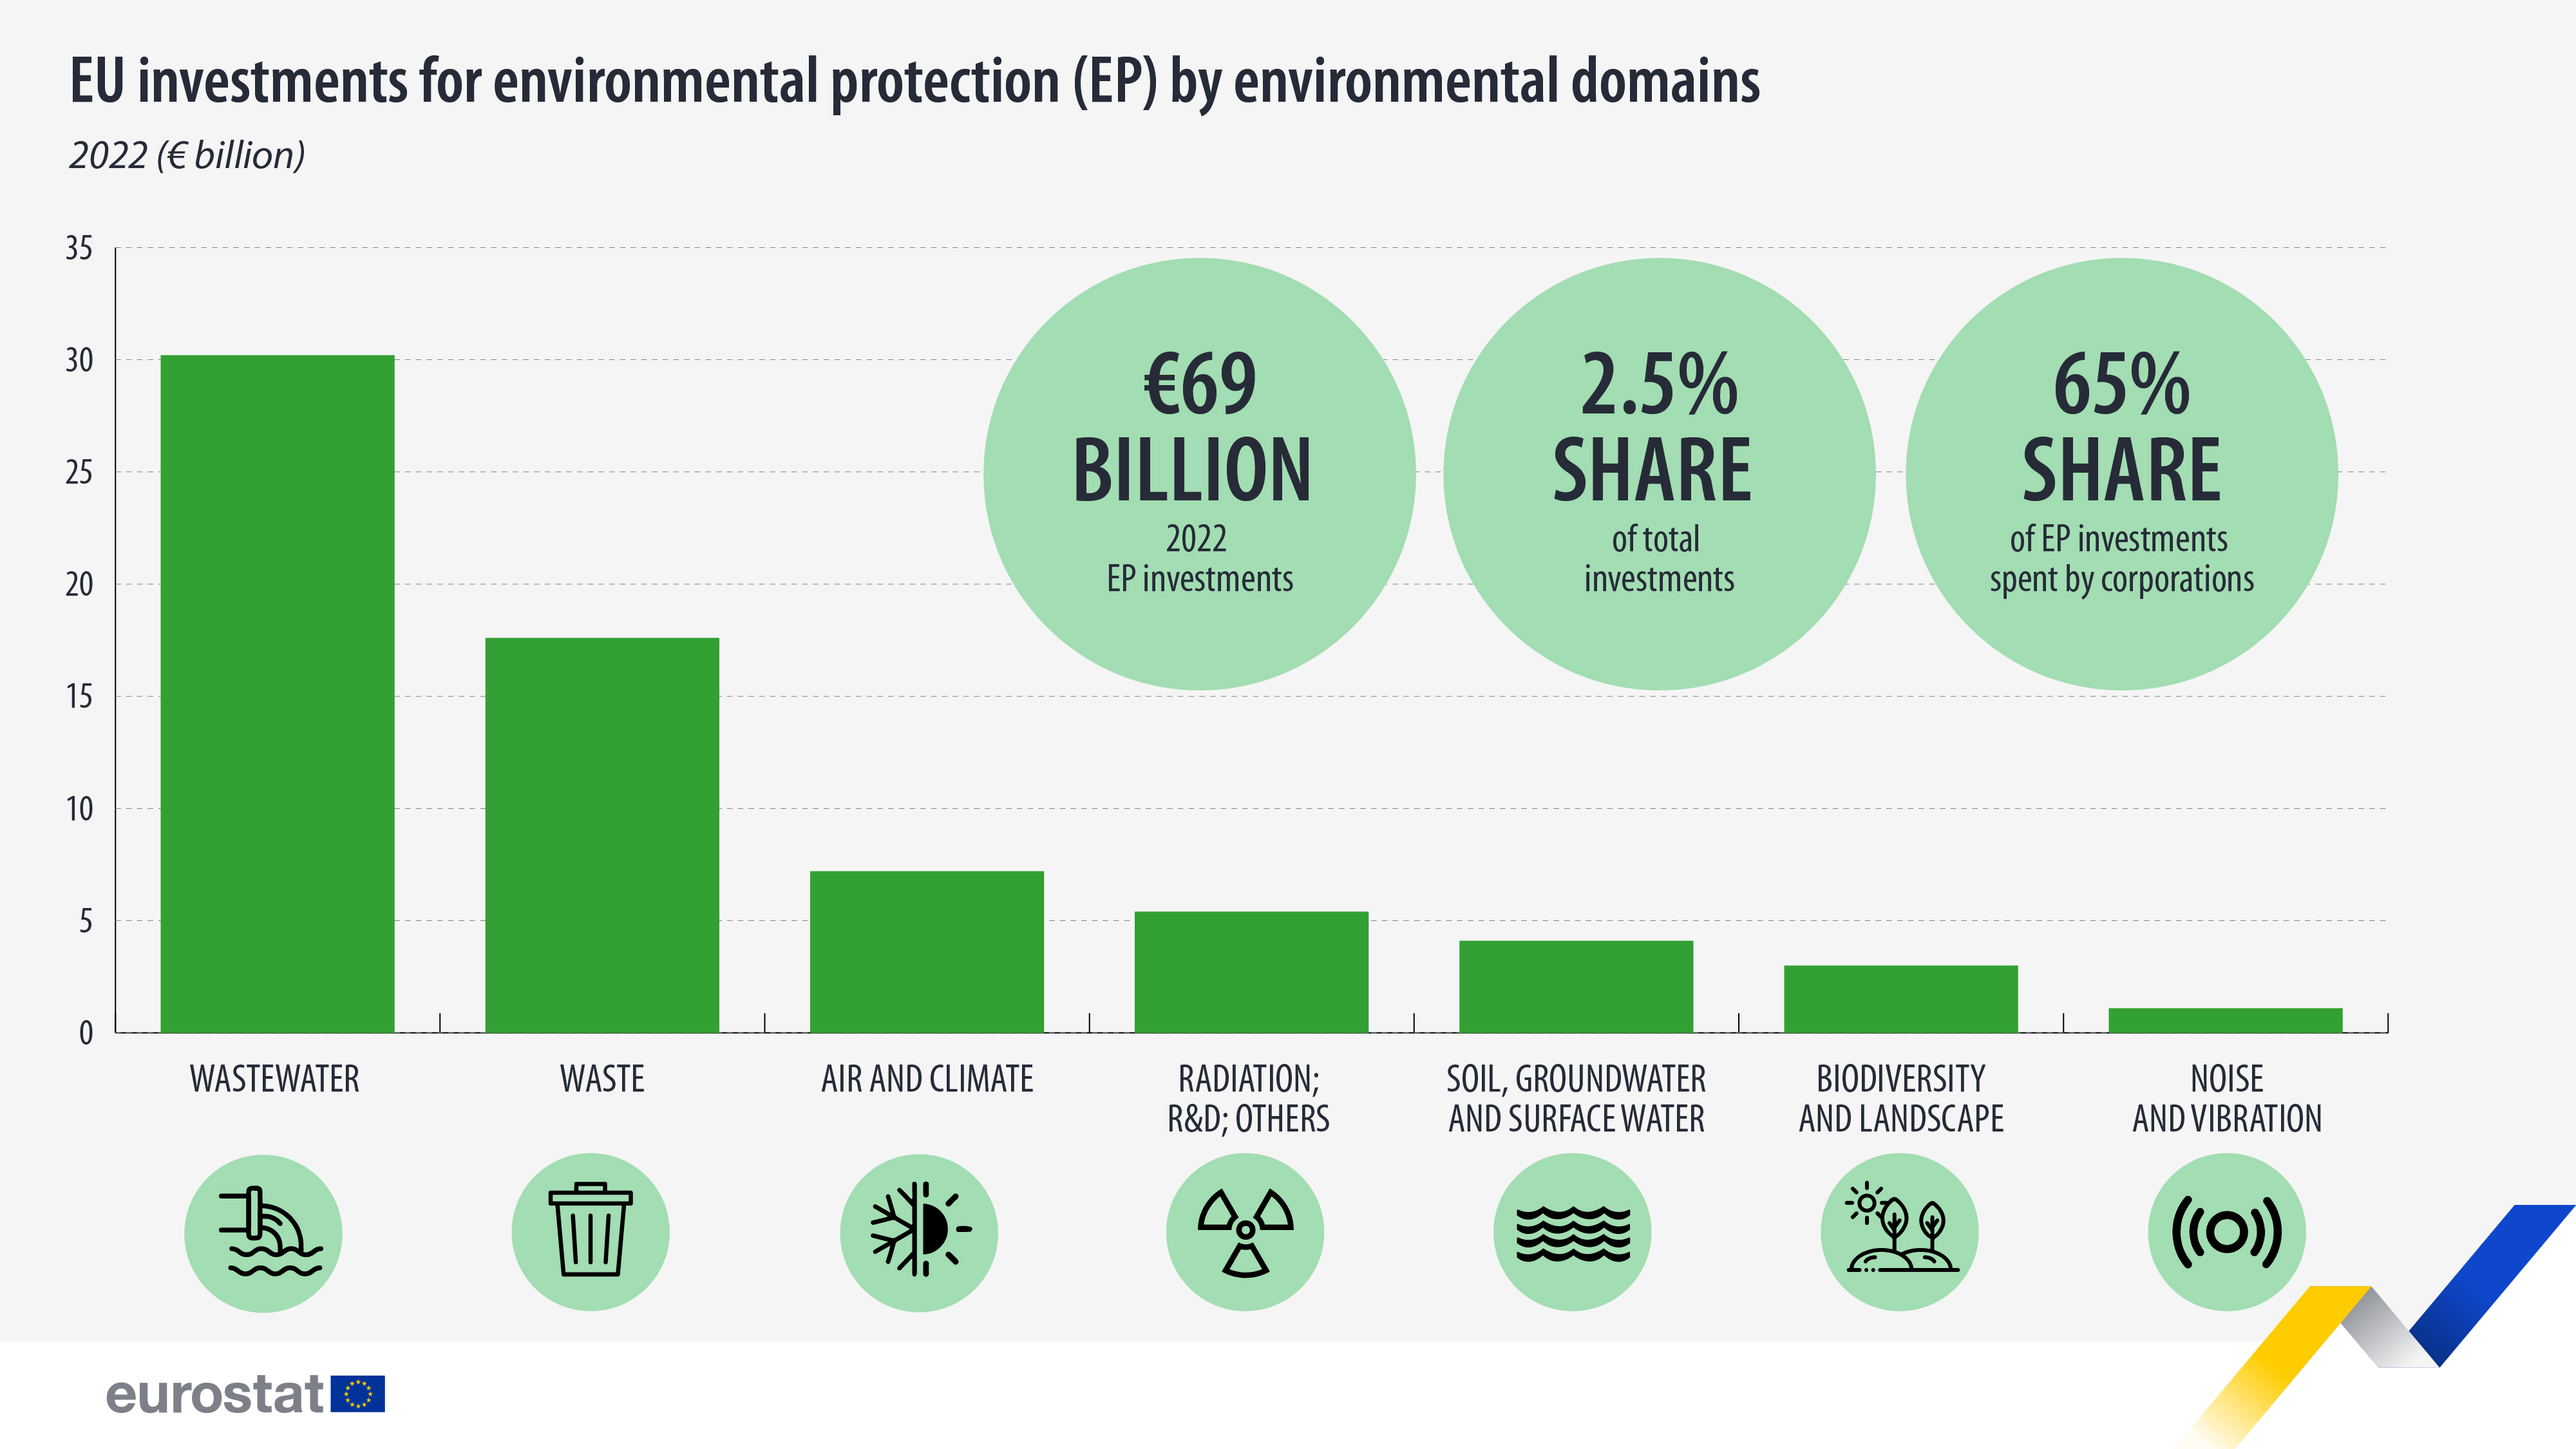 Infographic: Επενδύσεις της ΕΕ στην προστασία του περιβάλλοντος ανά περιβαλλοντικούς τομείς, 2022 (δισεκατομμύρια ευρώ)